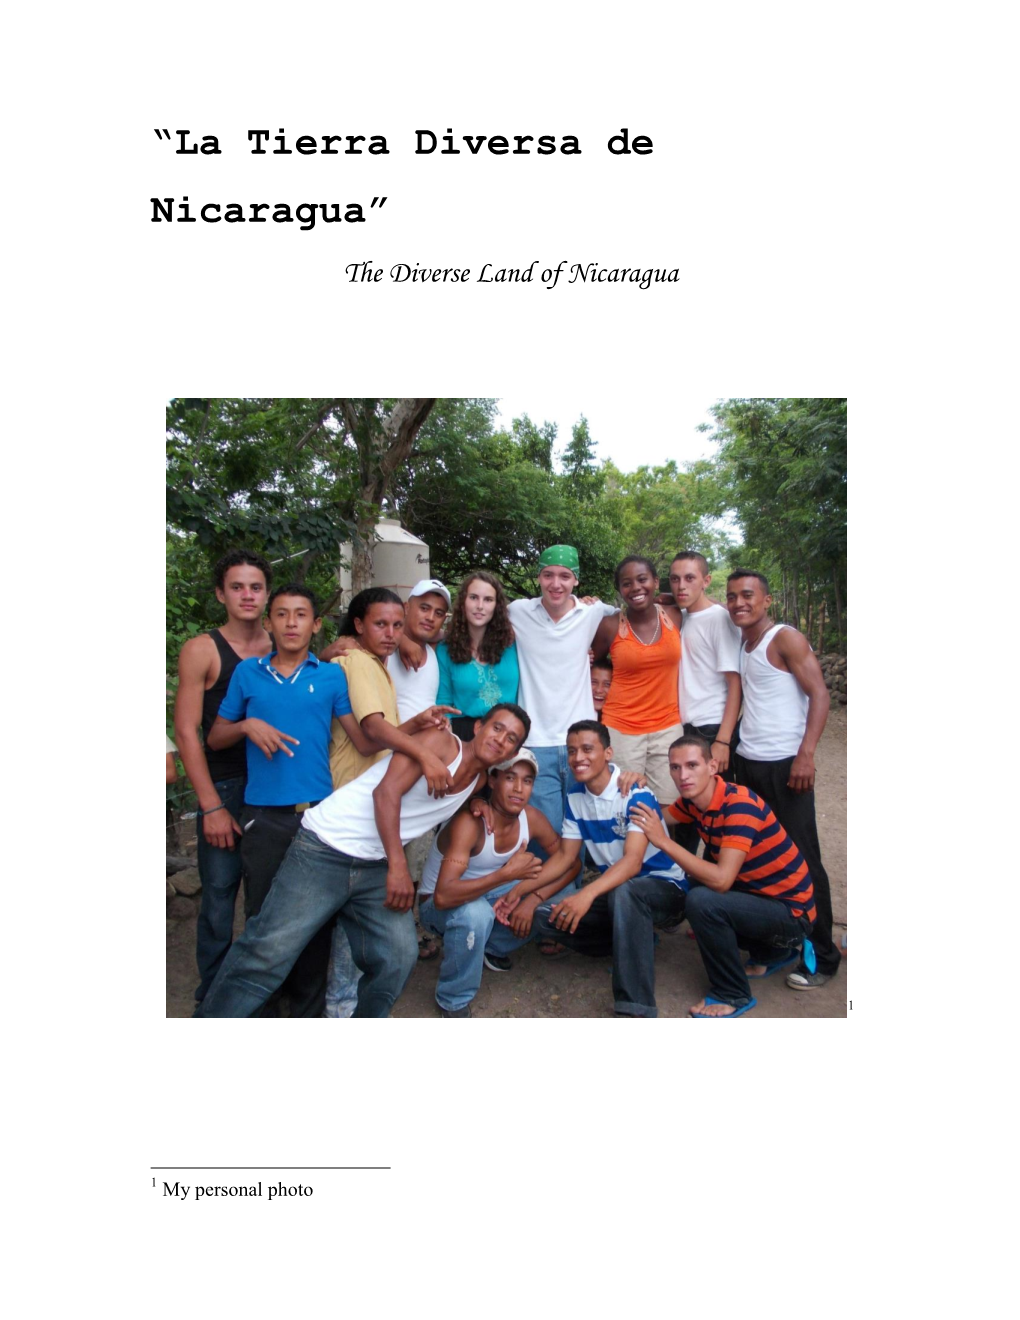 “La Tierra Diversa De Nicaragua” the Diverse Land of Nicaragua